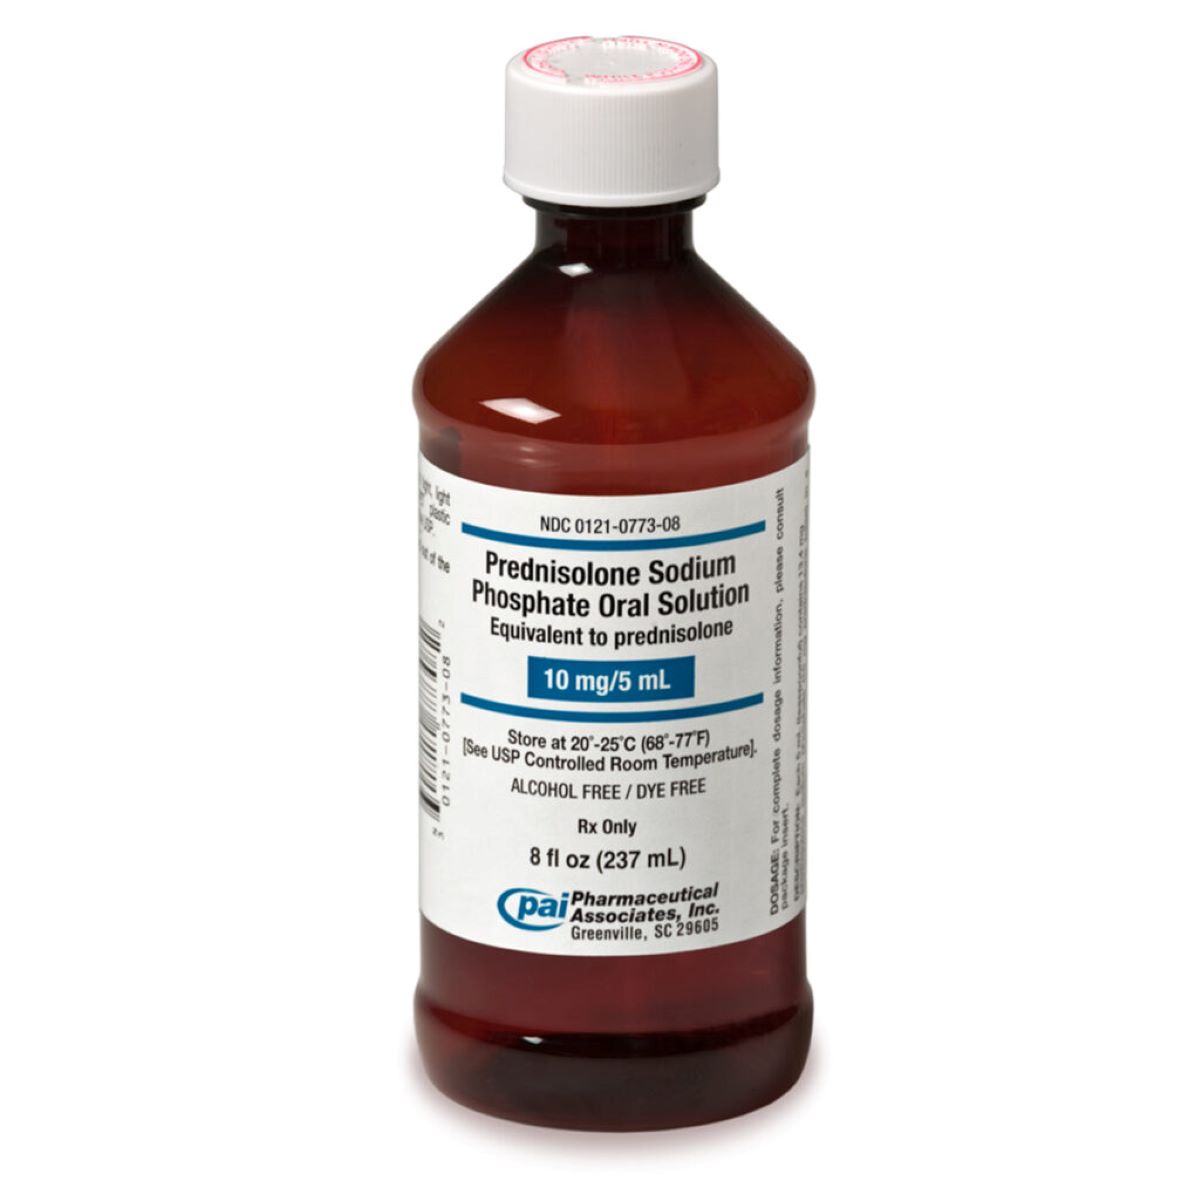 How To Store Prednisolone Liquid